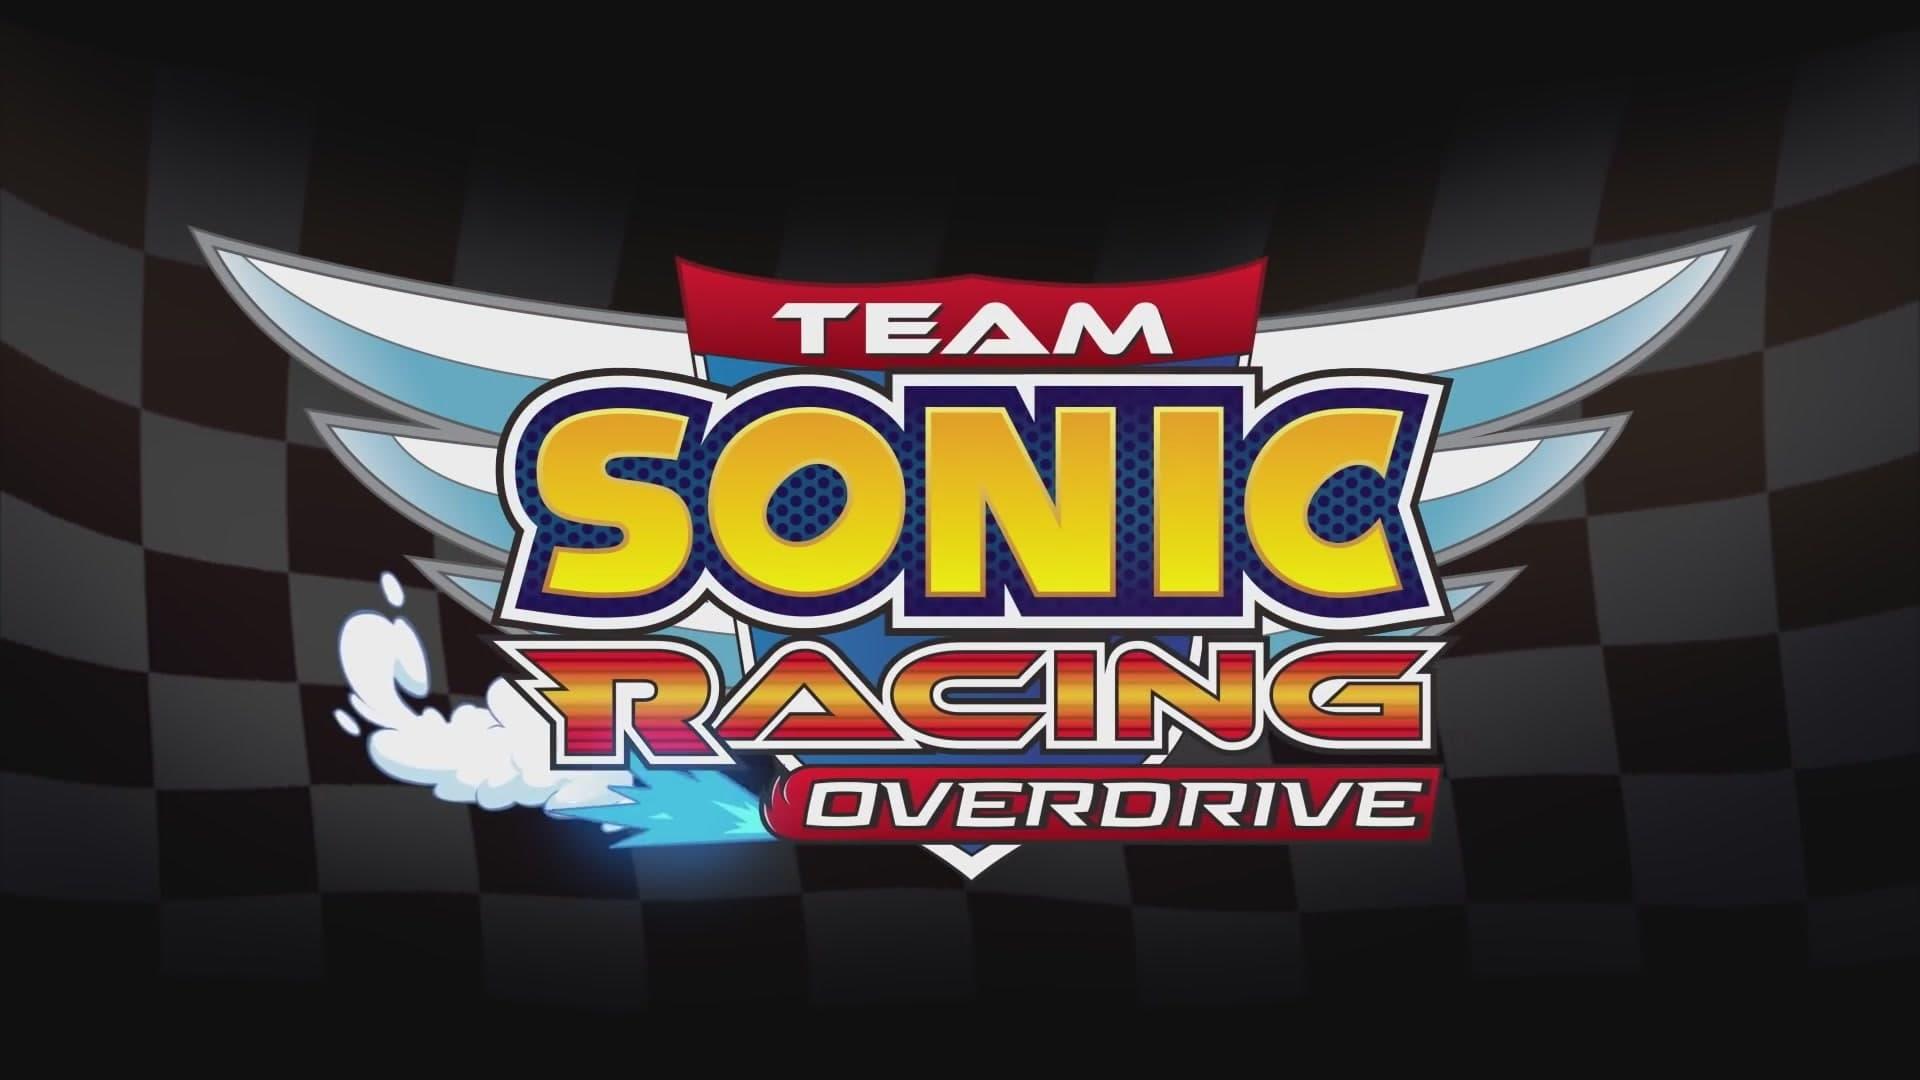 Team Sonic Racing Overdrive backdrop